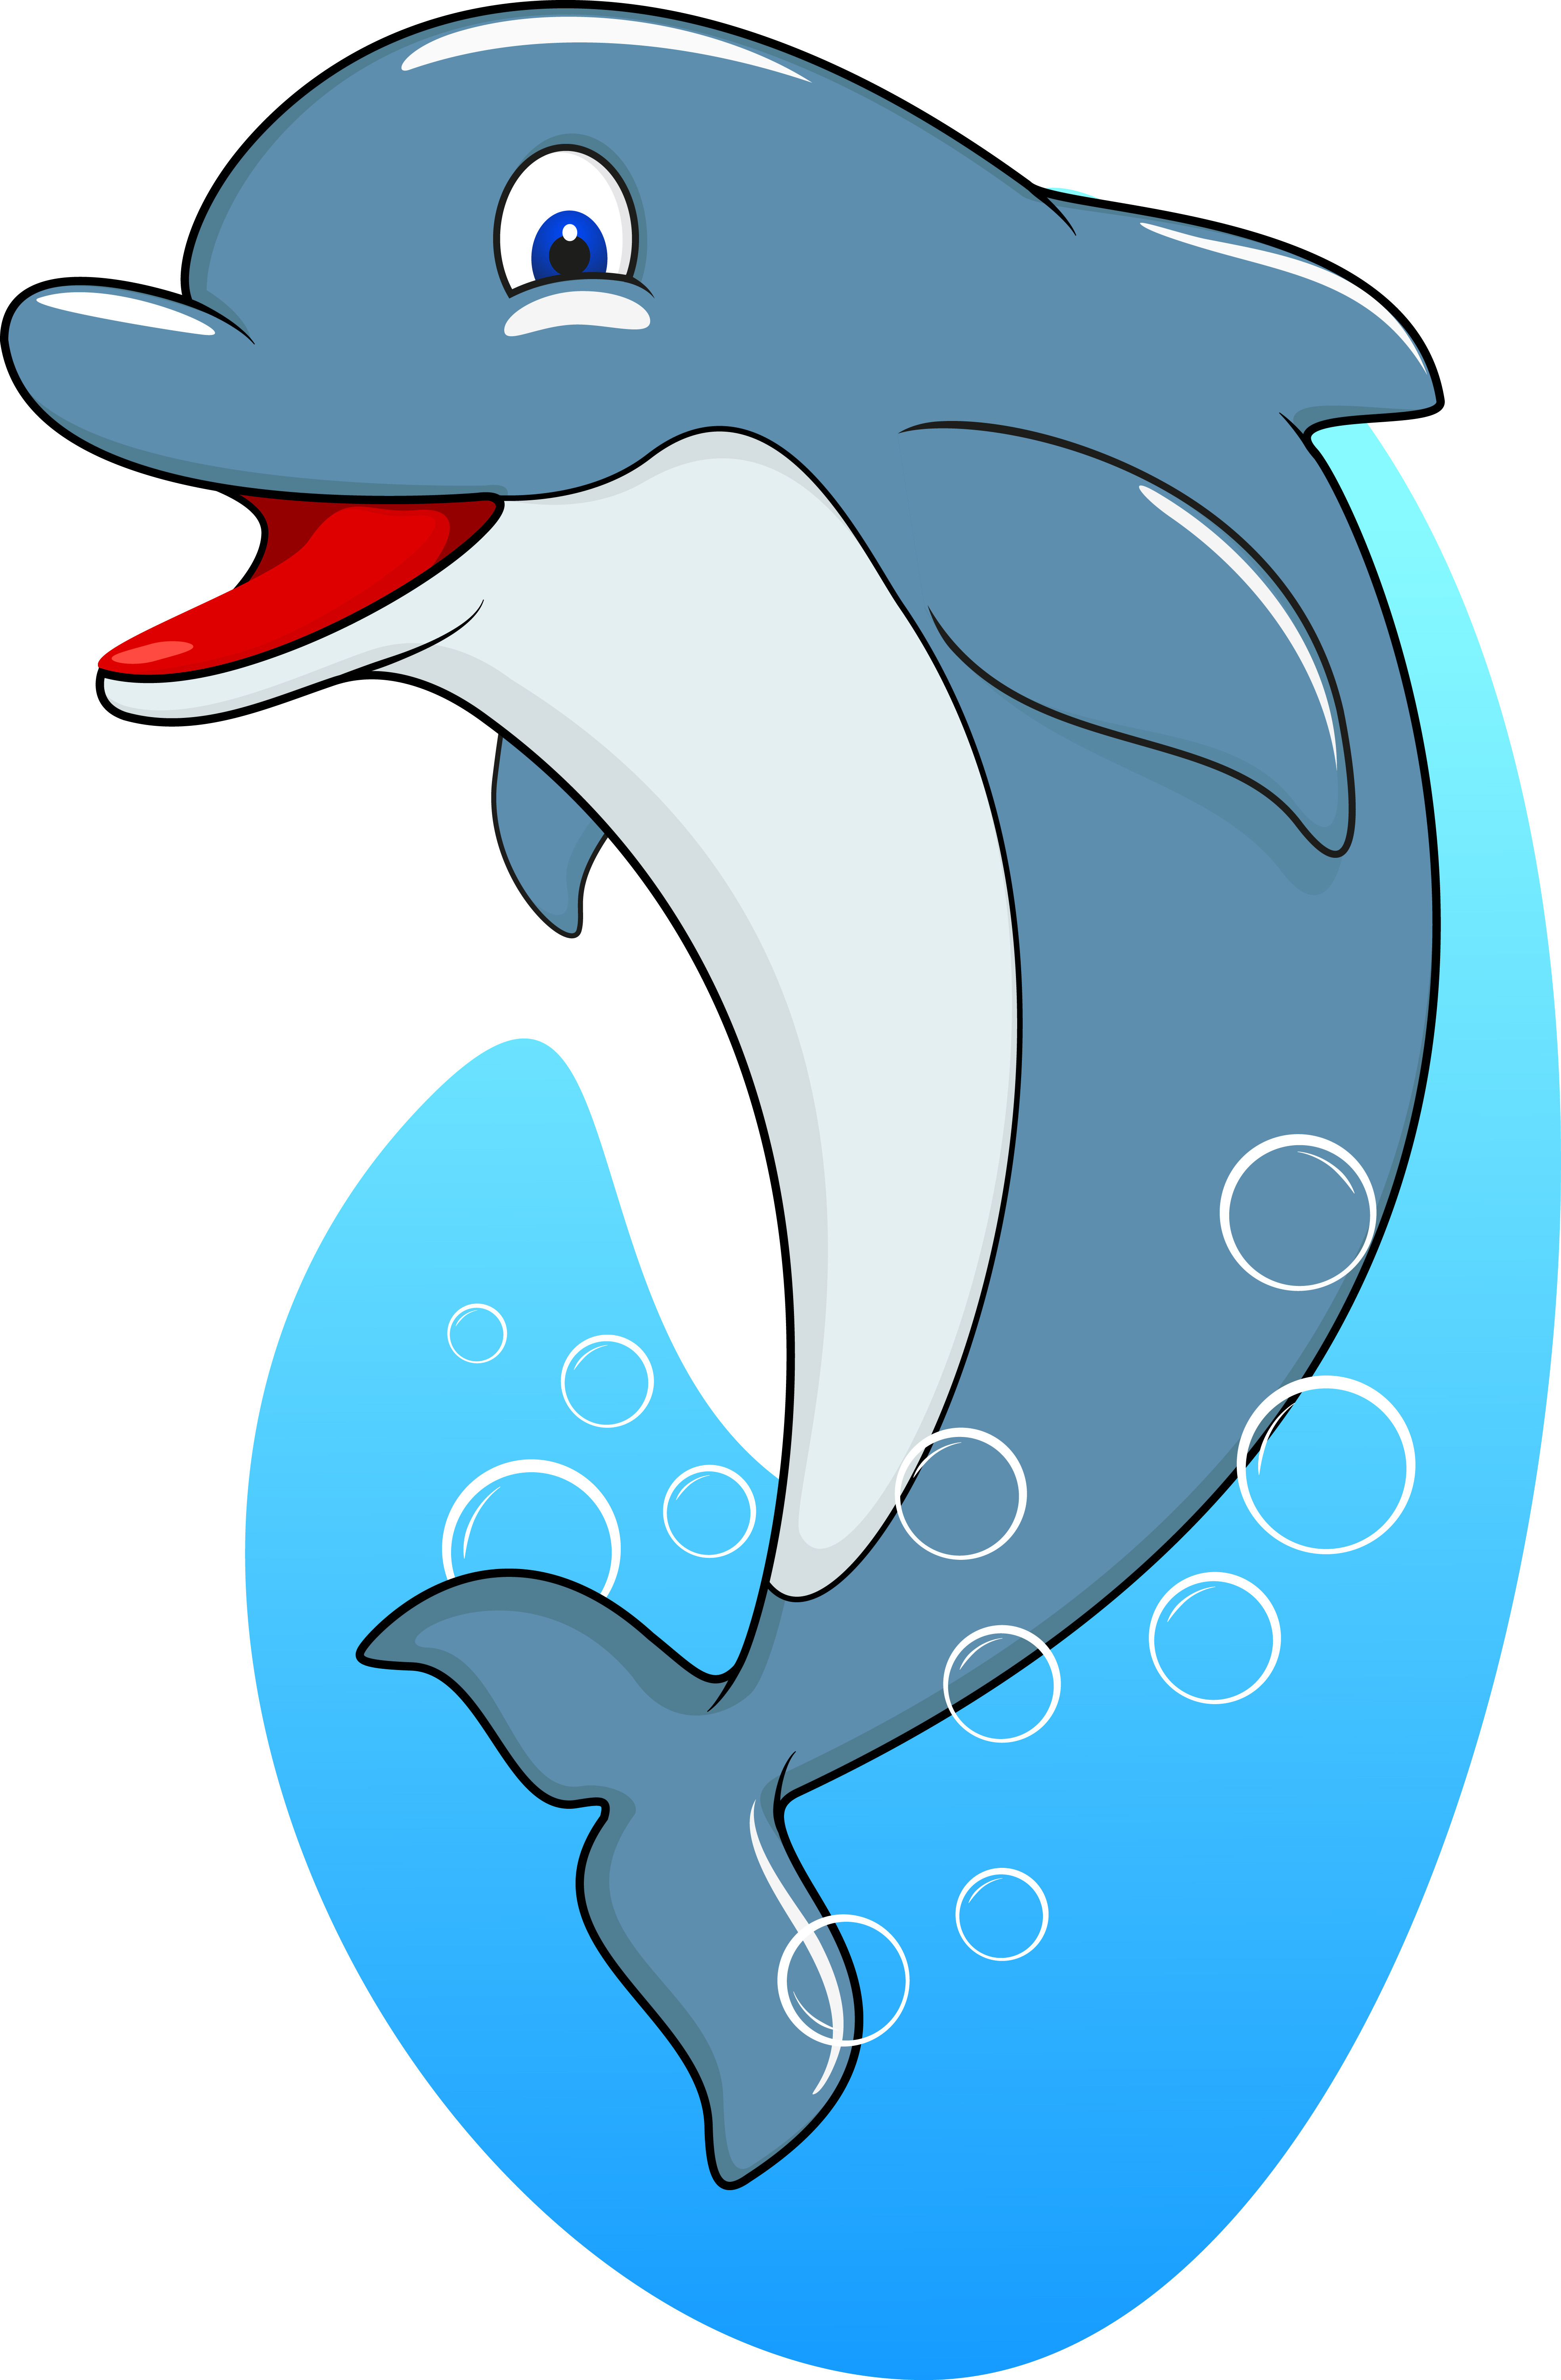 Cute Standing Dolphin cartoon - Download Free Vectors ...